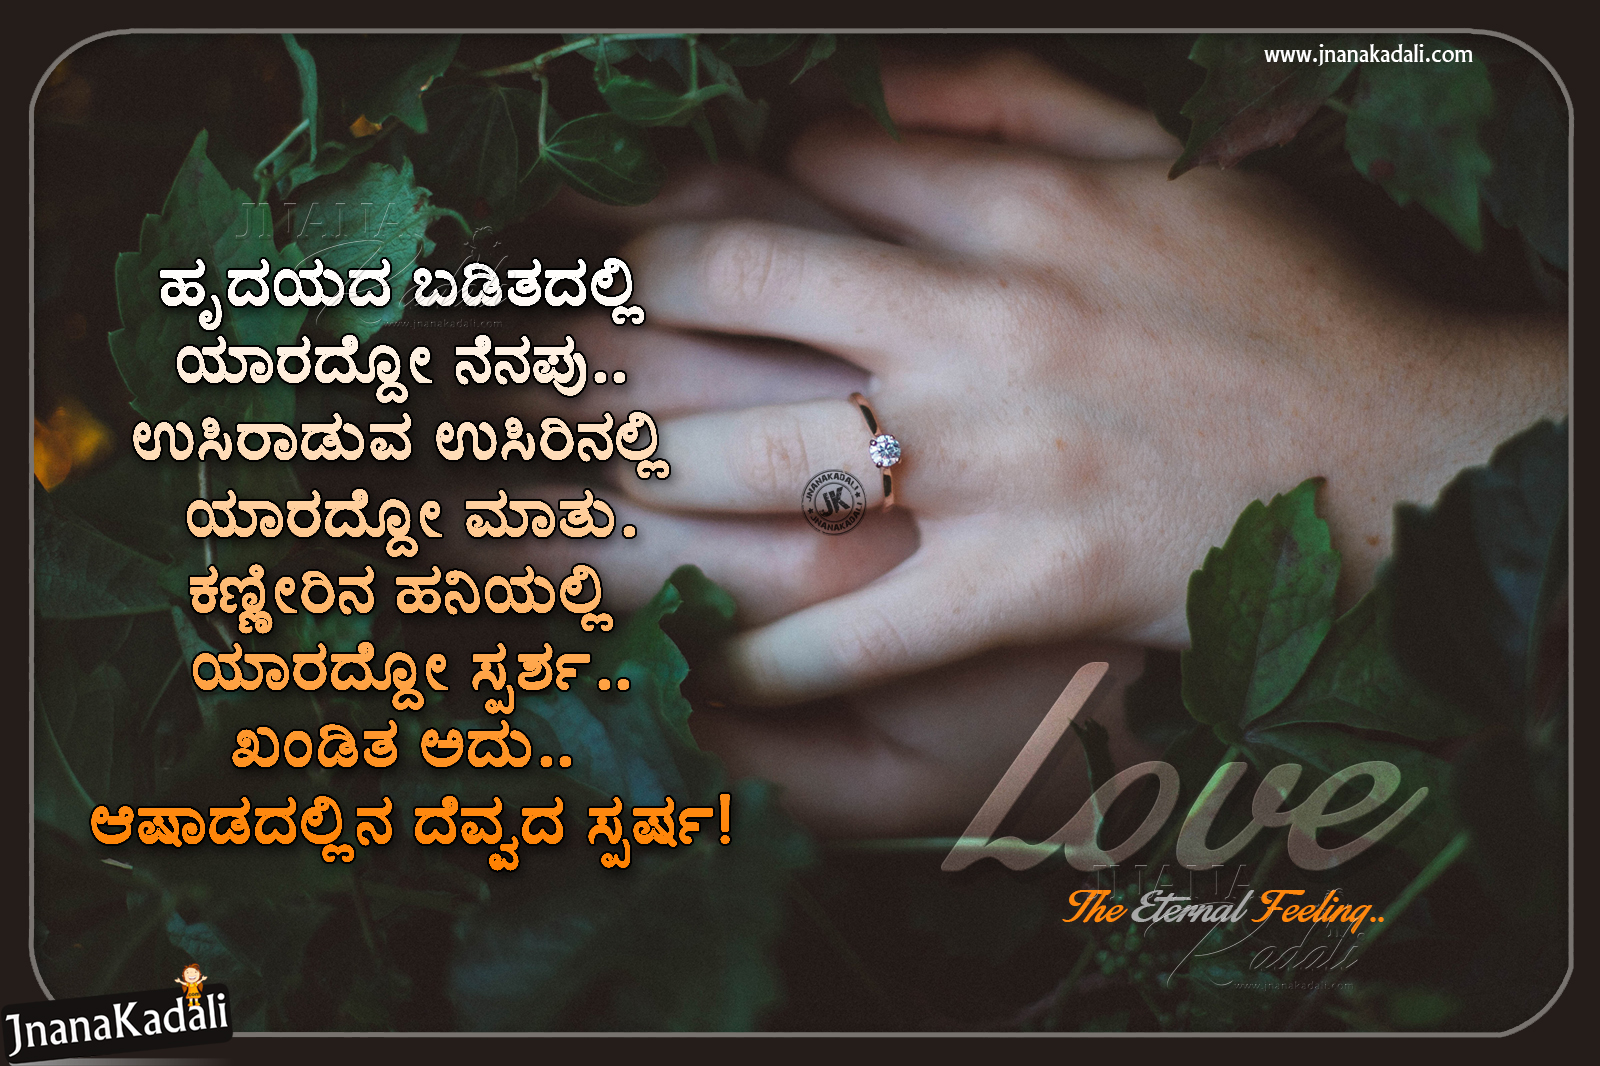 Heart Touching Love Quotes In Kannada Dharmasandehalu 1600x1066 Wallpaper Teahub Io Hi friends kannada dj janapada song janapada dj mp3 kannada kannada janapada dj remix mp3 songs kannada dj song. heart touching love quotes in kannada